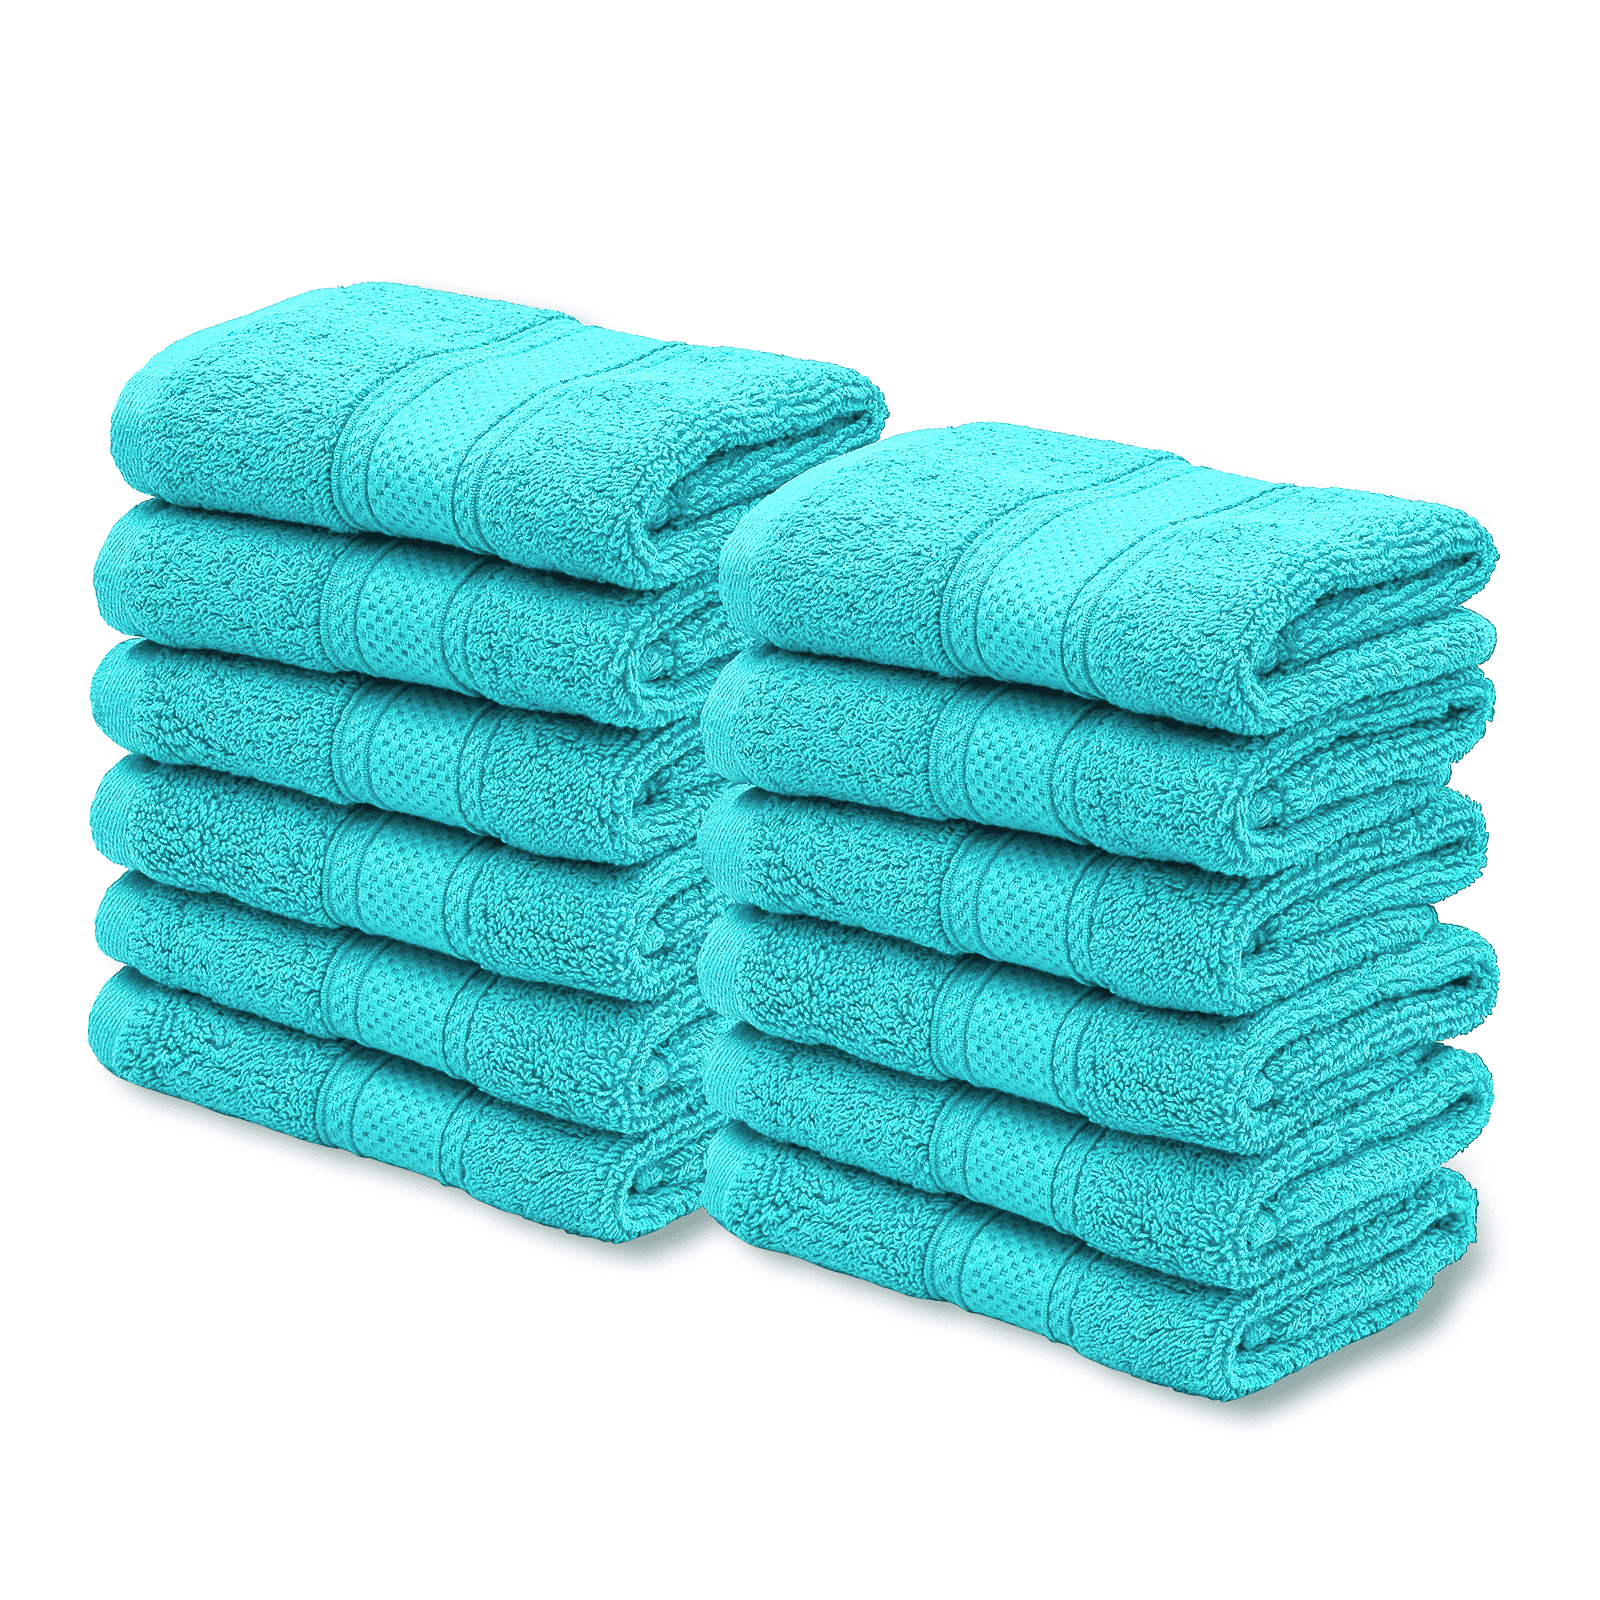 12 Pack - 12 x 12 White Cotton Ribbon Washcloths Rags - Lt Weight Thin  Cloth Rags - Bath/Exfoilating/Kitchen/Garage - 1 lb per Dozen